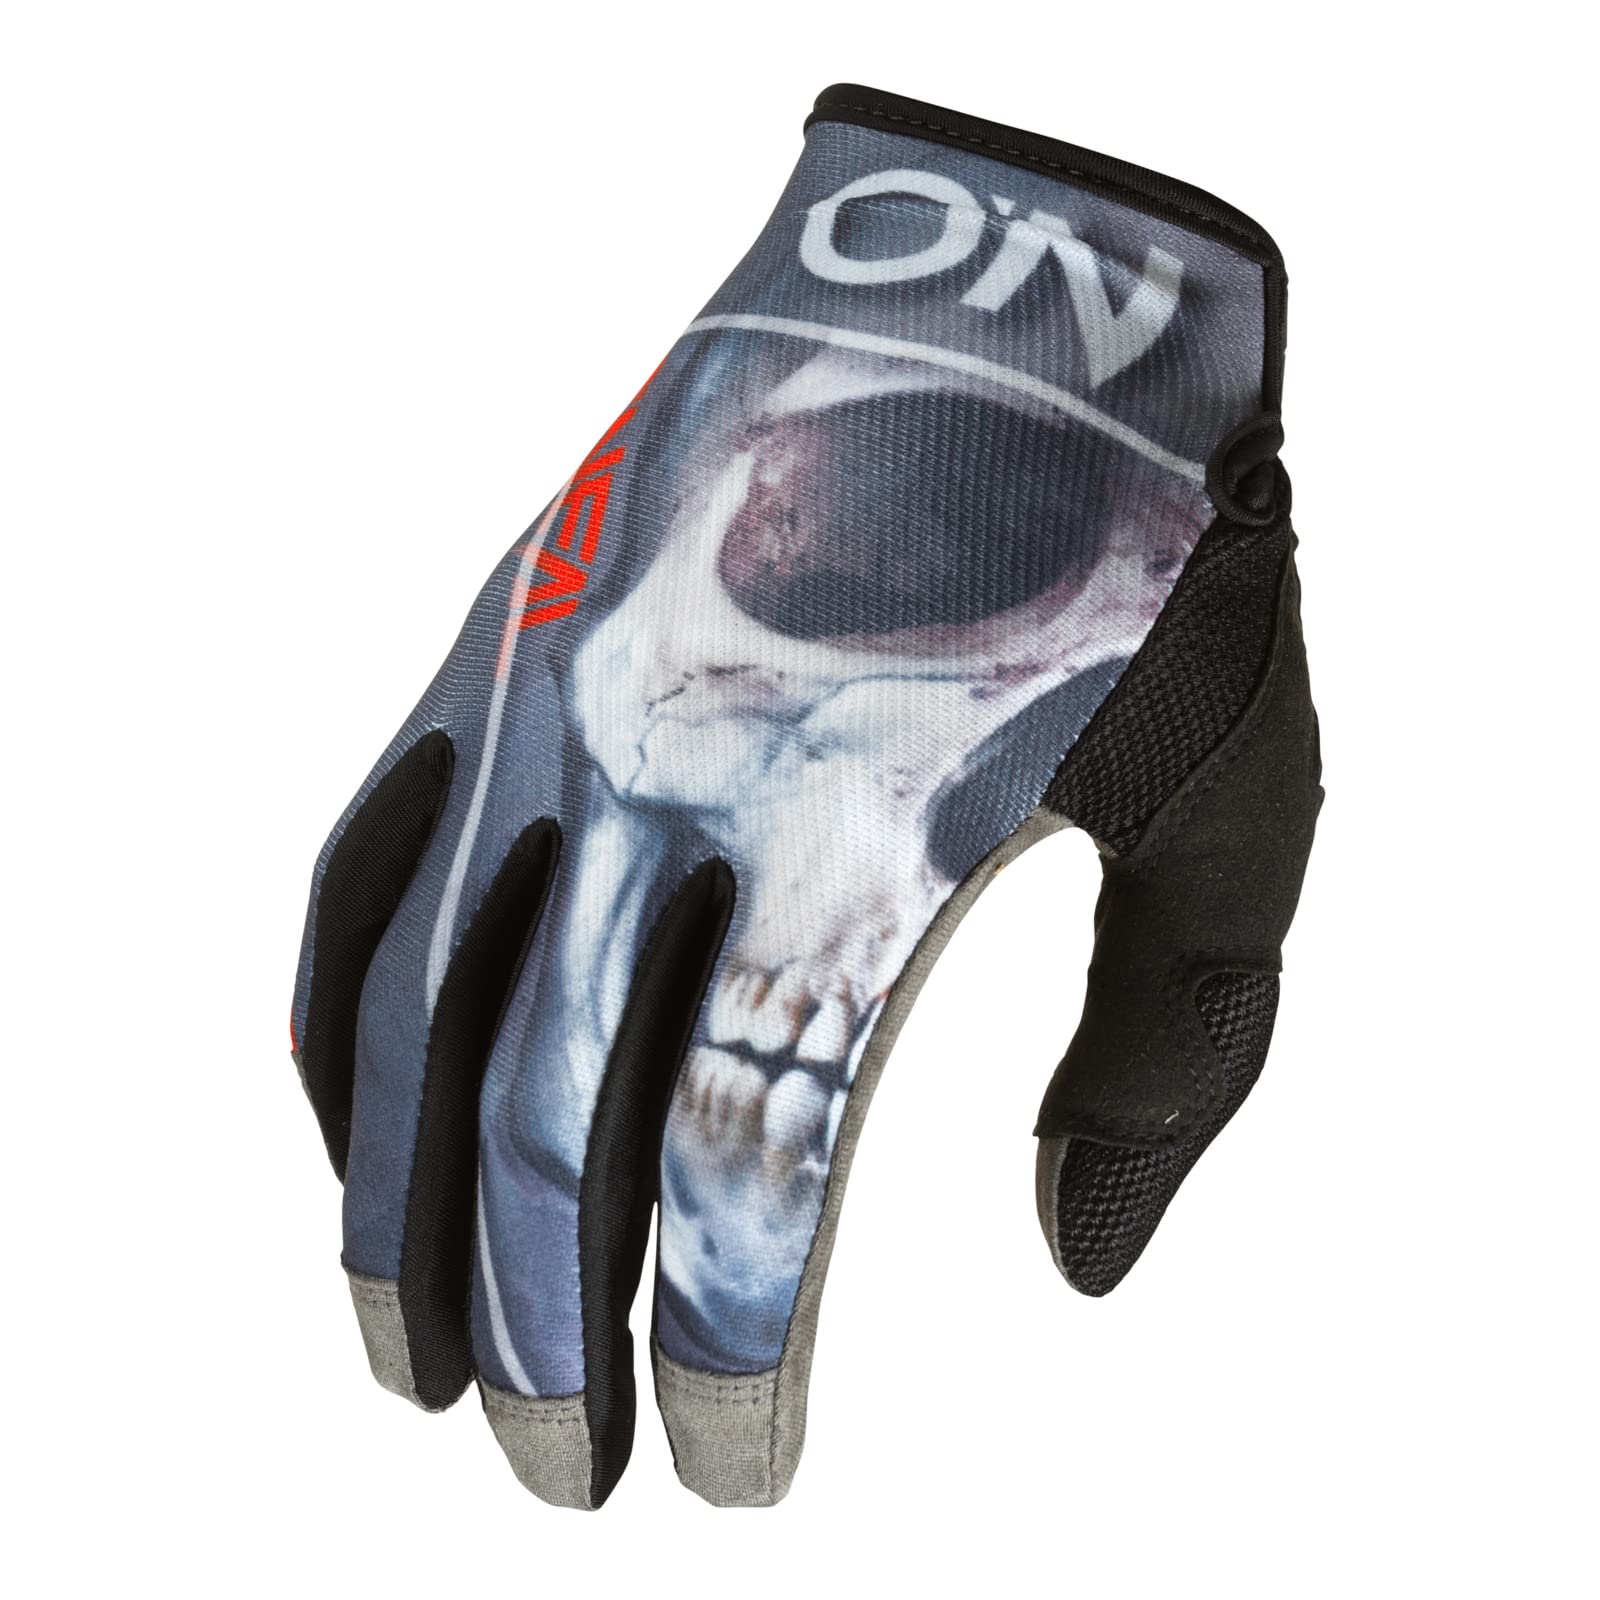 O'NEAL | Fahrrad- & Motocross-Handschuhe | MX MTB DH FR Downhill Freeride | Langlebige, Flexible Materialien, belüftete Nanofront-Handpartie | Mayhem Glove Bones V.22 | Erwachsene | Schwarz Rot | L von O'NEAL